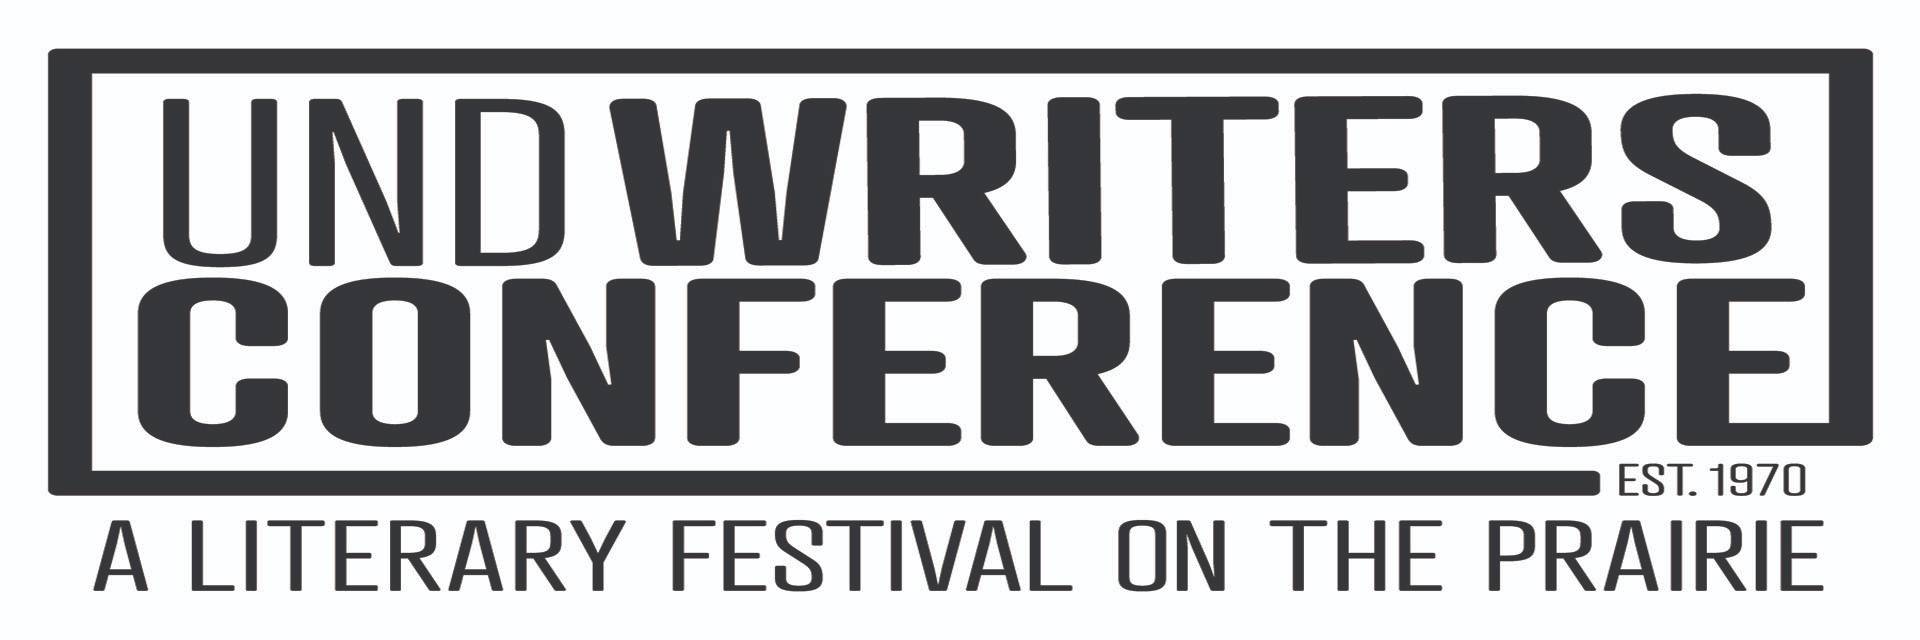 UND Writers Conference logo